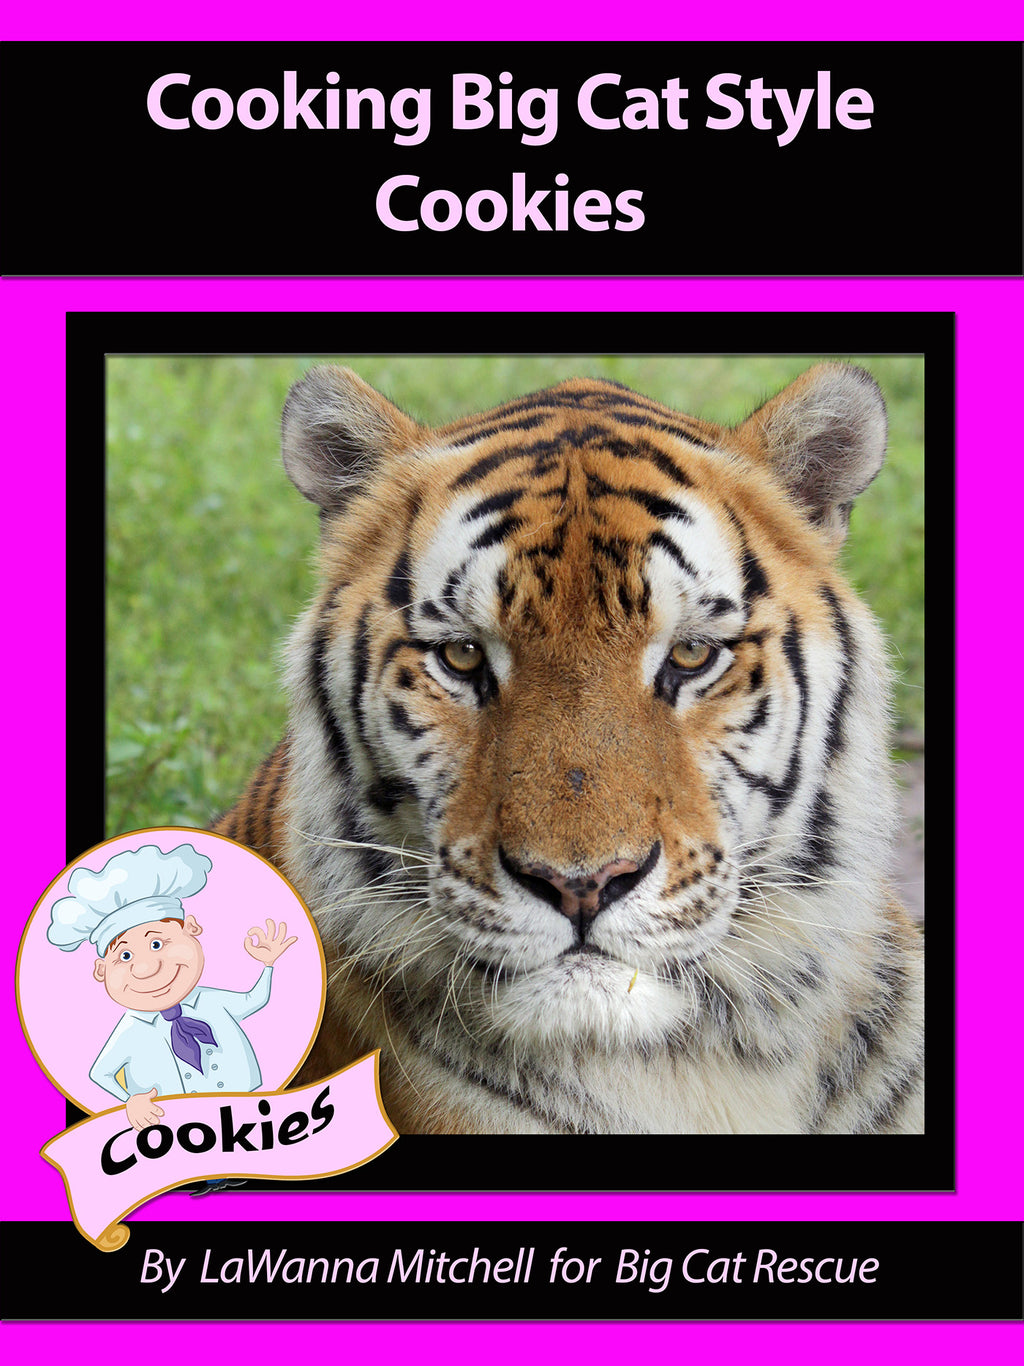 Download - Big Cat Rescue Cookies Cookbook